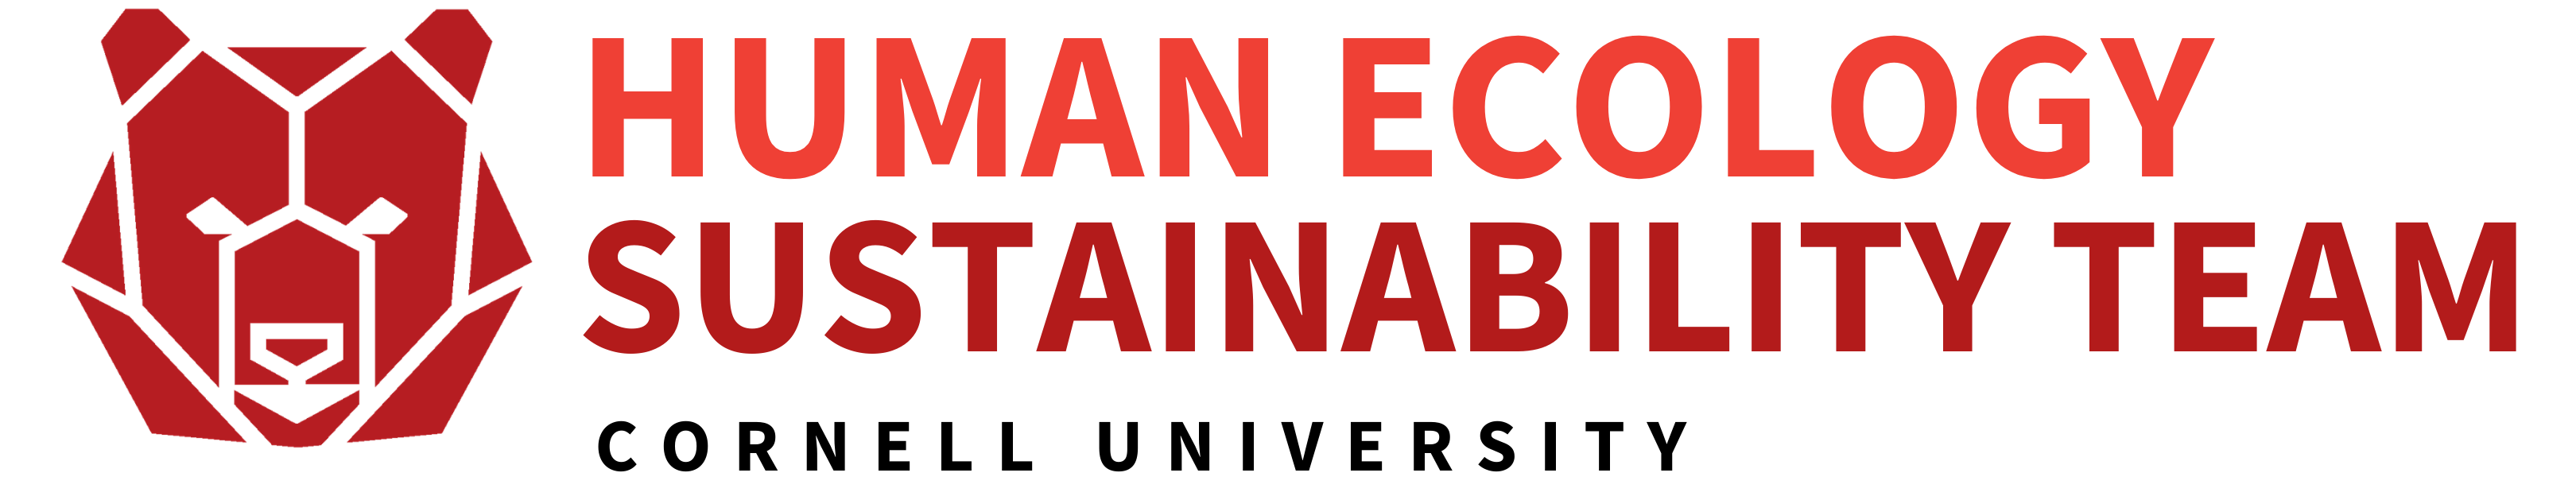 CHE Green Team Logo